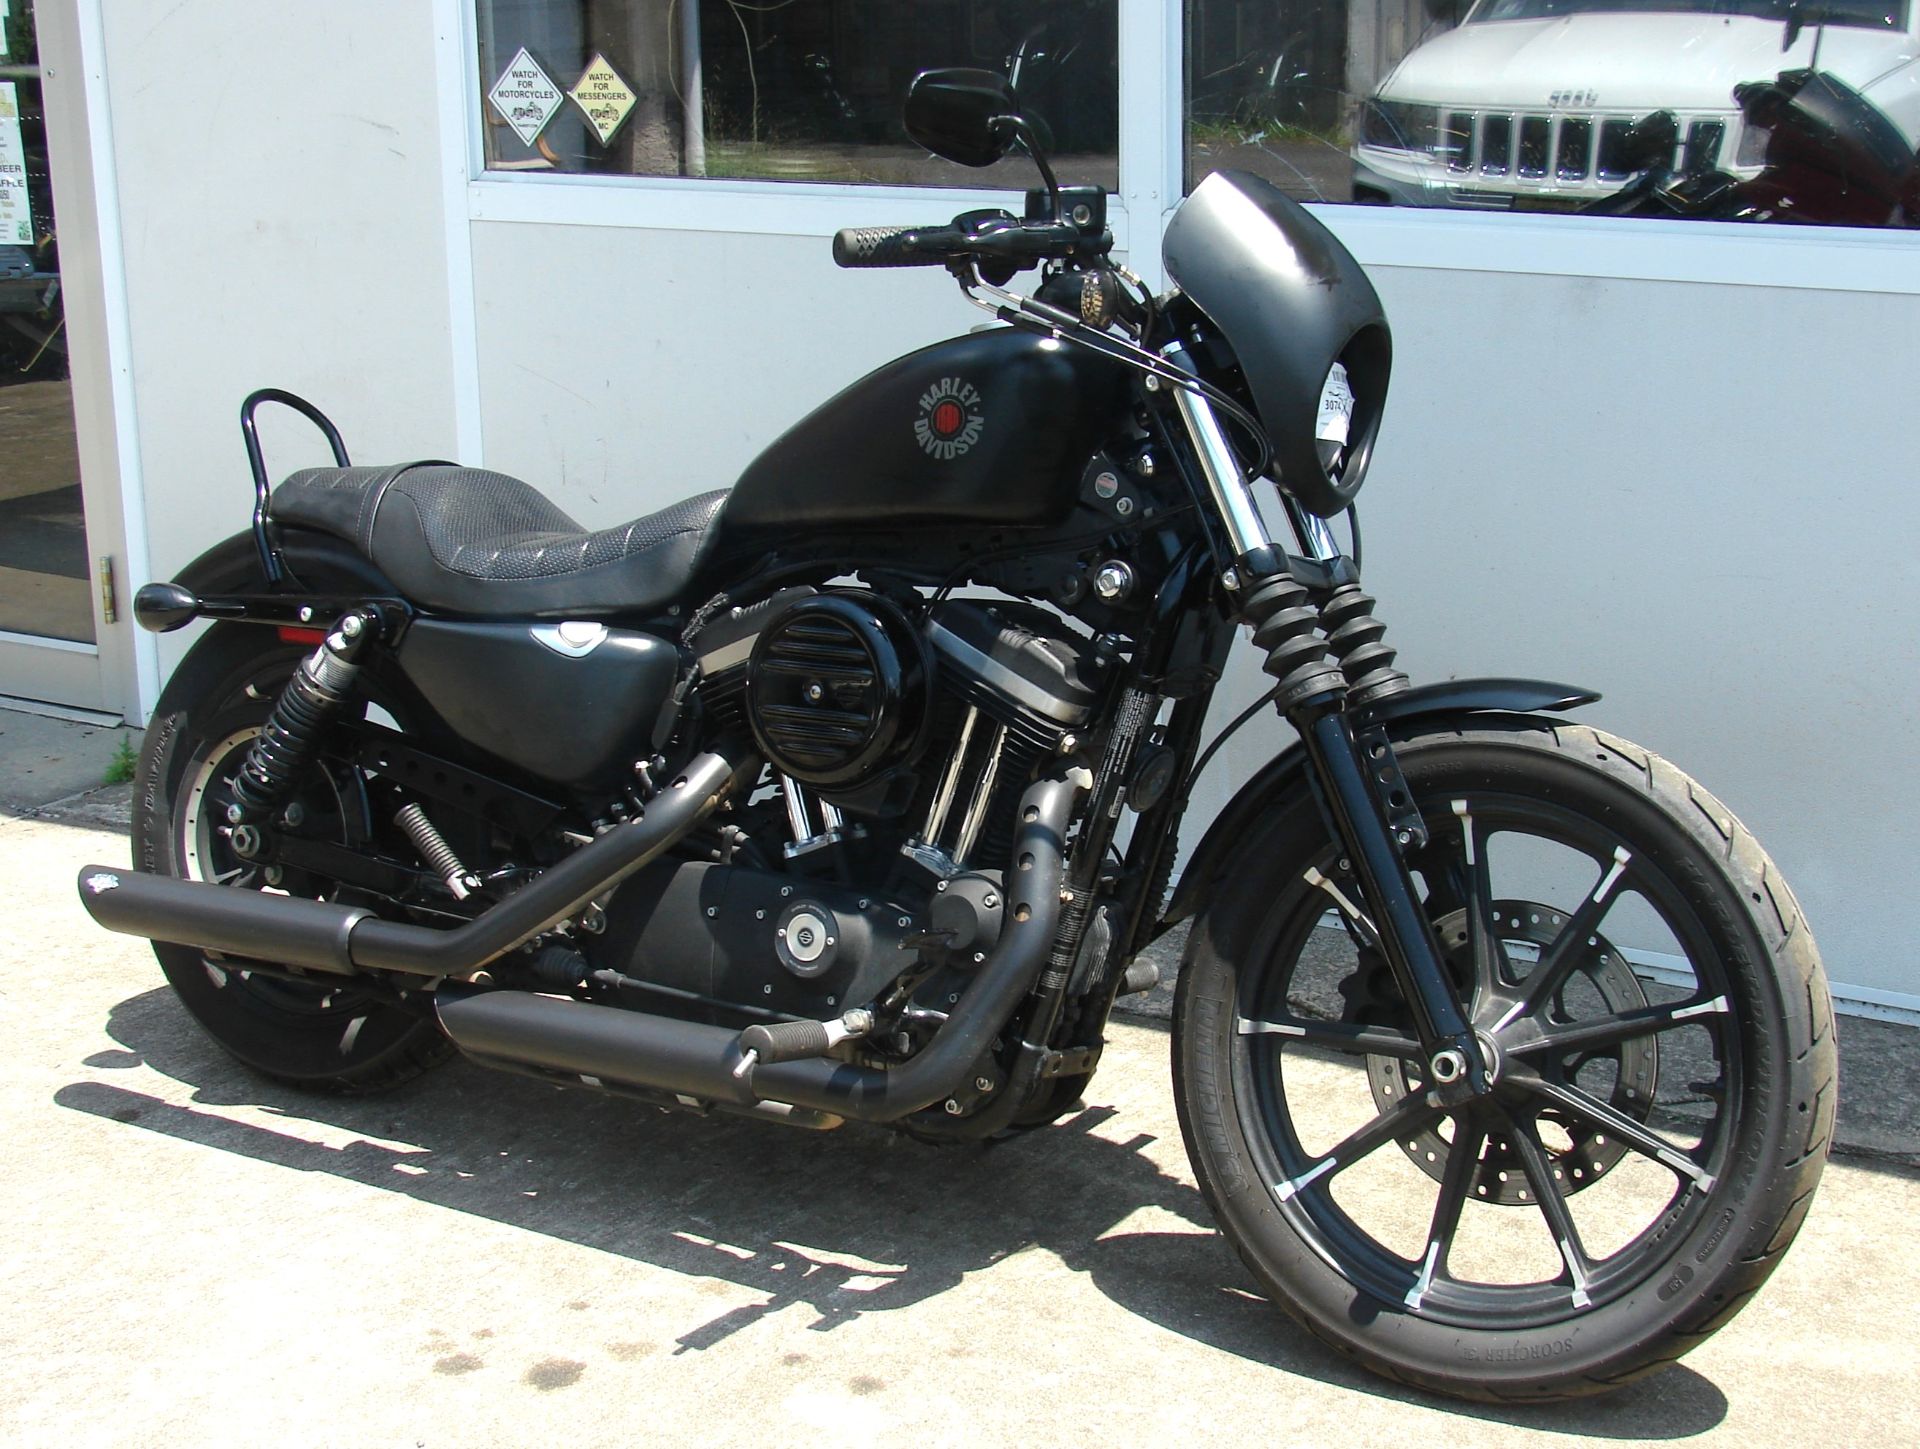 2020 Harley-Davidson XL 883 N Iron Nightster in Williamstown, New Jersey - Photo 4